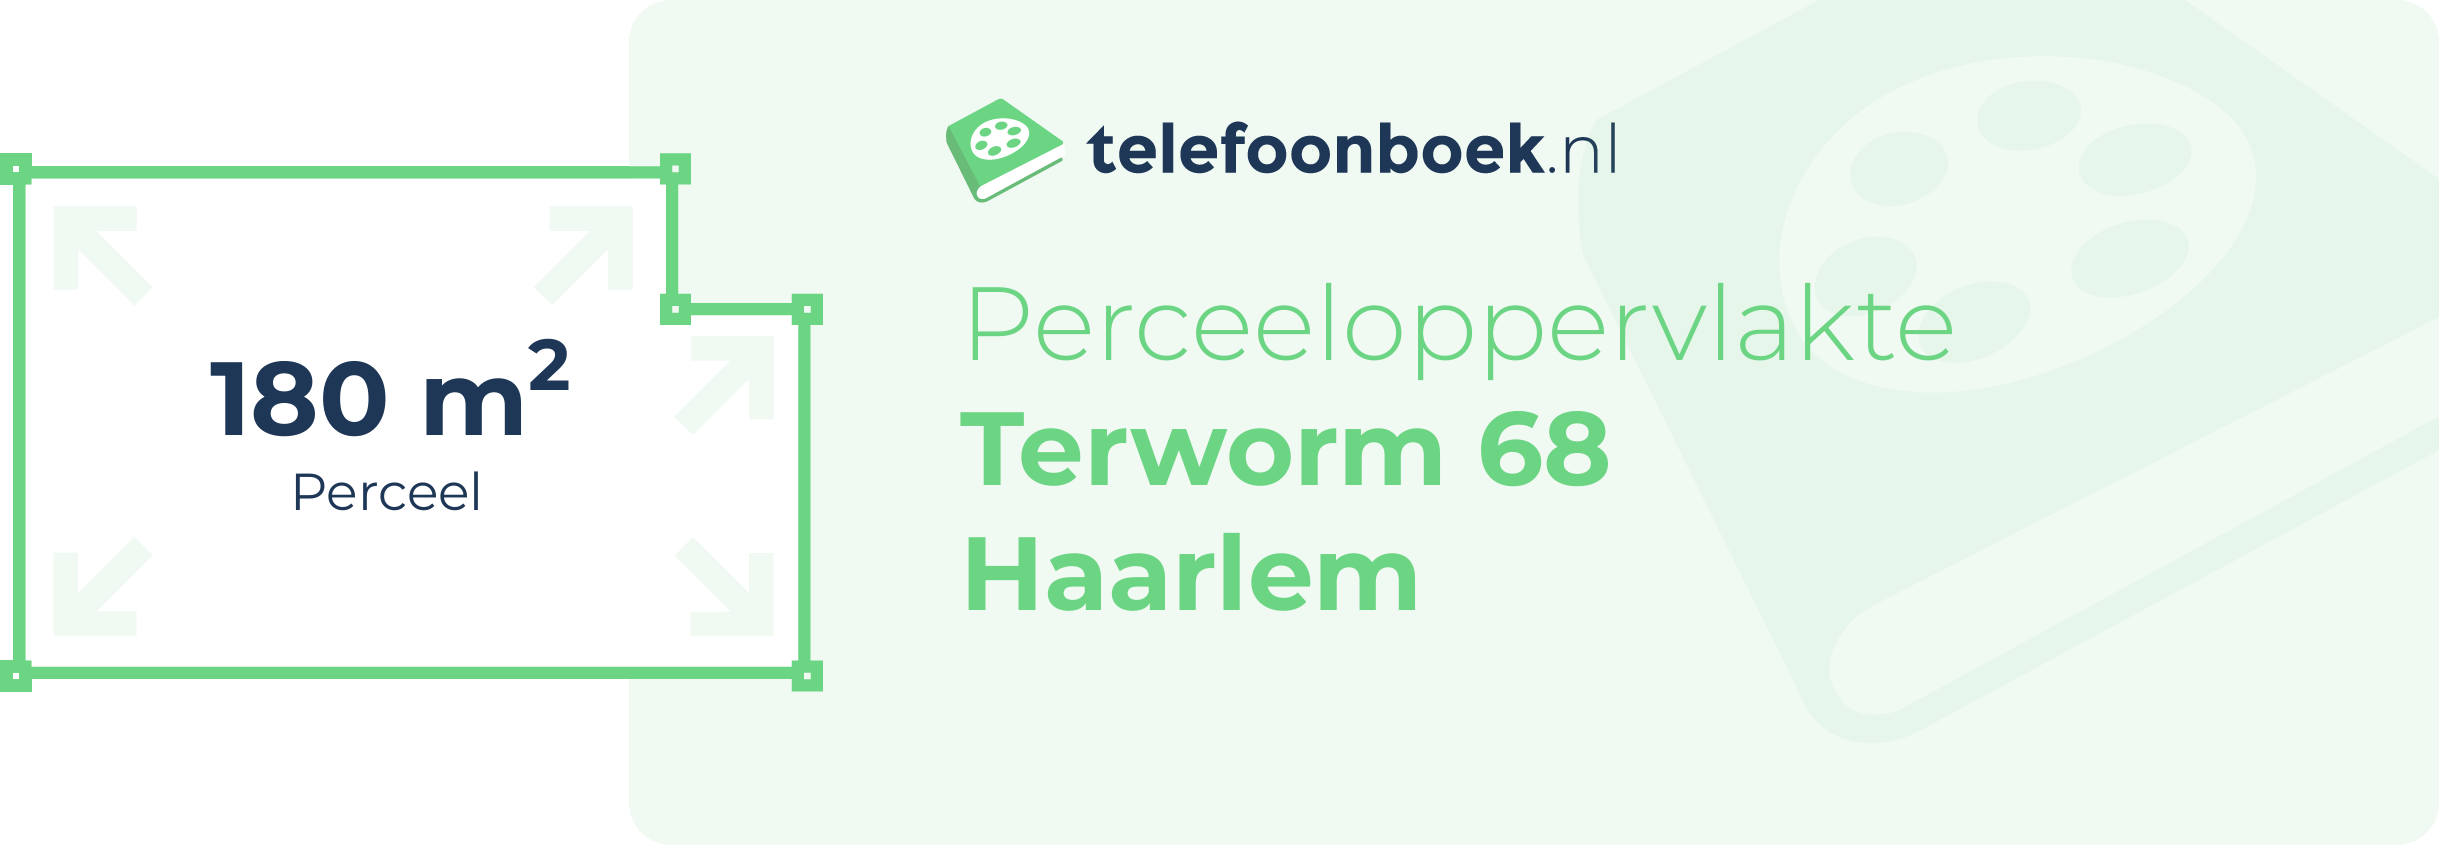 Perceeloppervlakte Terworm 68 Haarlem